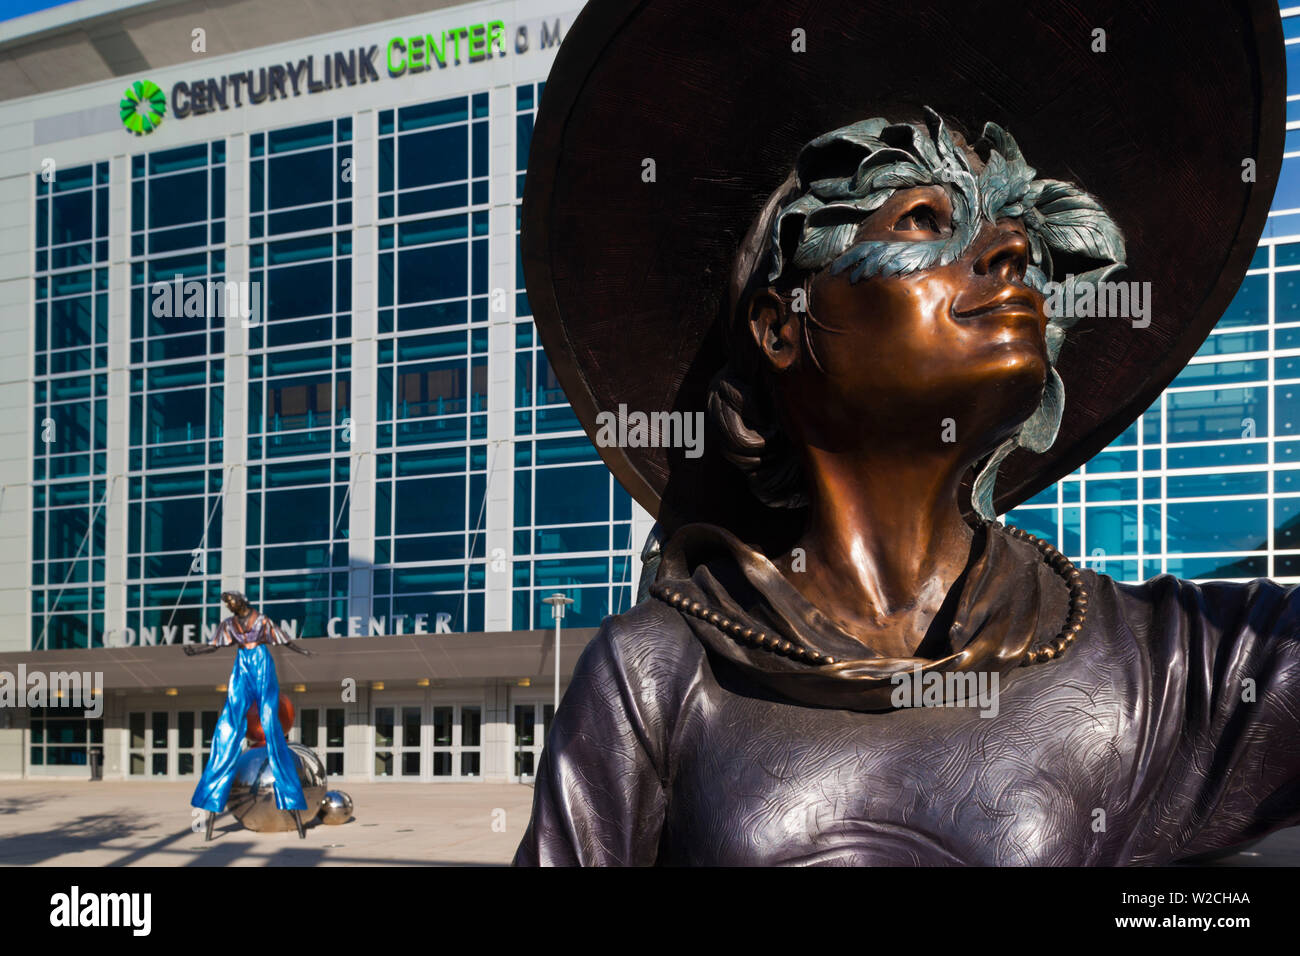 USA, Nebraska, Omaha, Statuen von der Jahrhundert-Link-Center Stockfoto